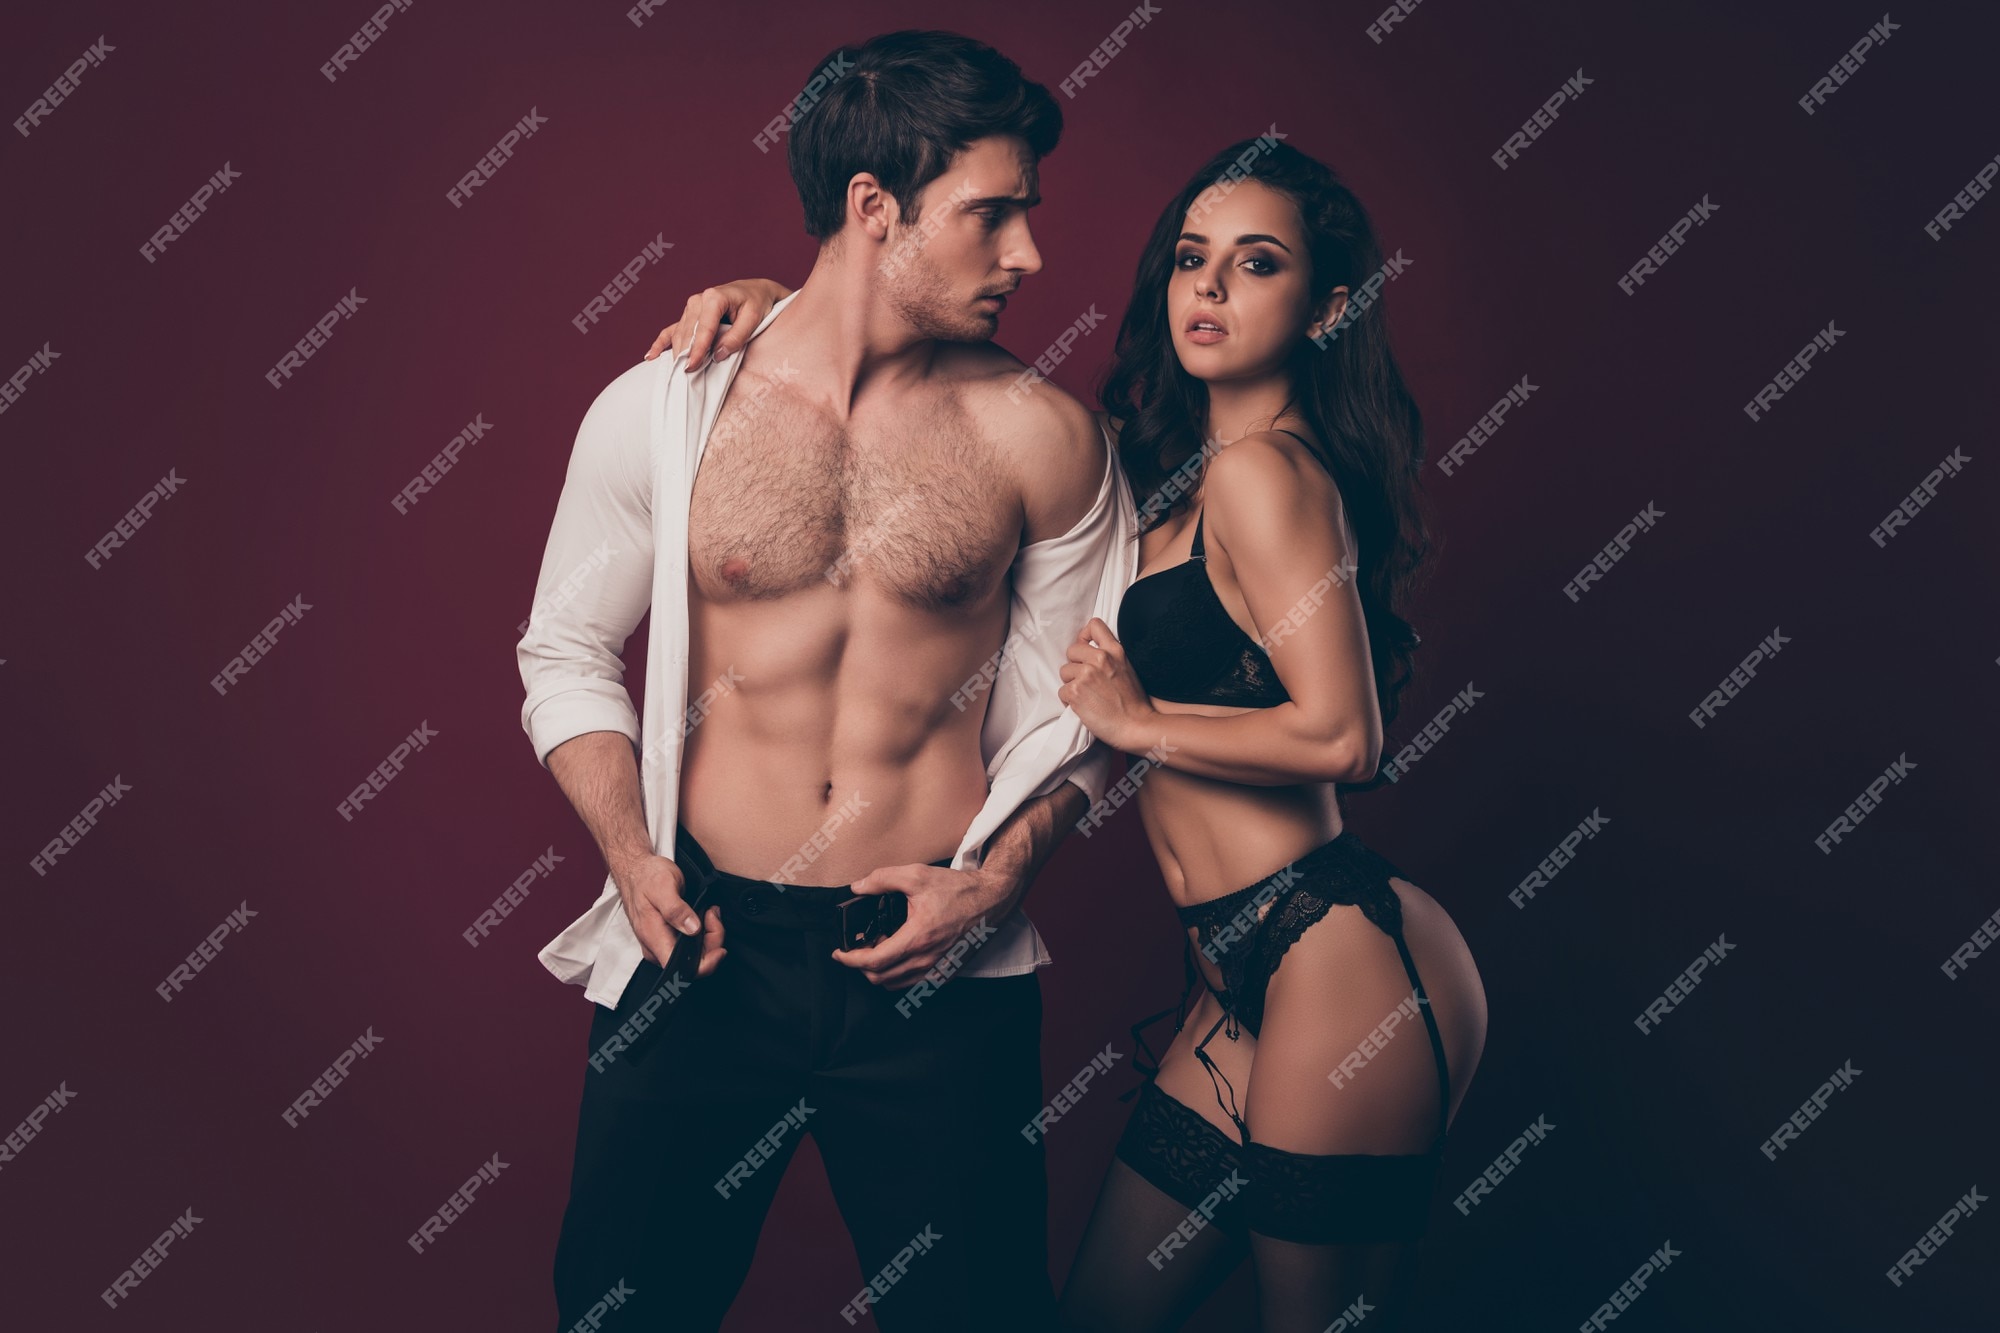 amy garten recommends men and women undressing pic